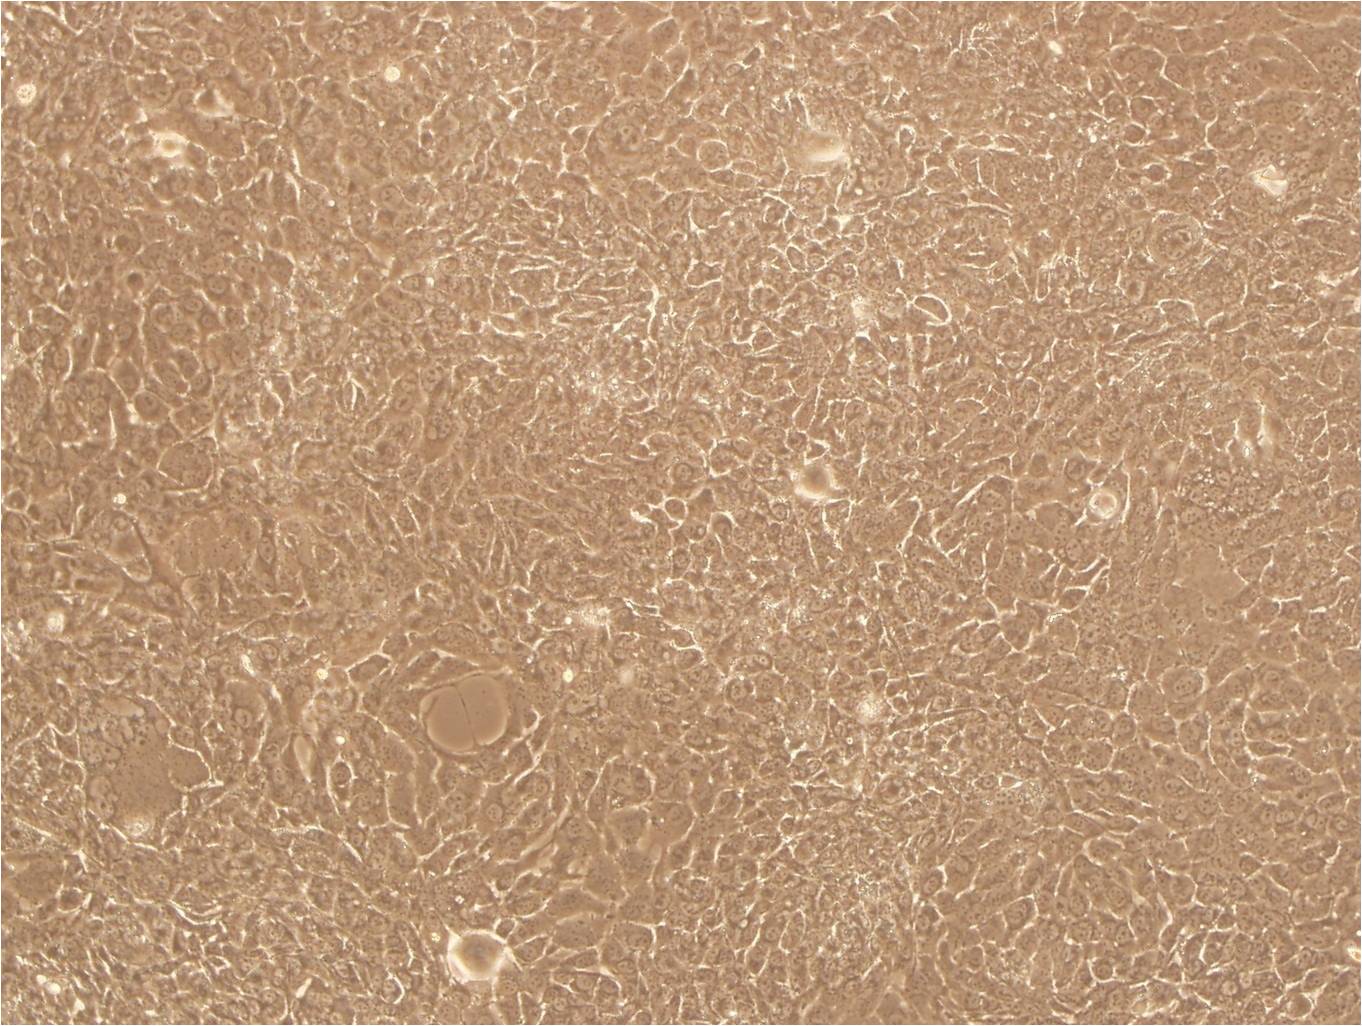 TE4 Cells(赠送Str鉴定报告)|小鼠B淋巴细胞,TE4 Cells